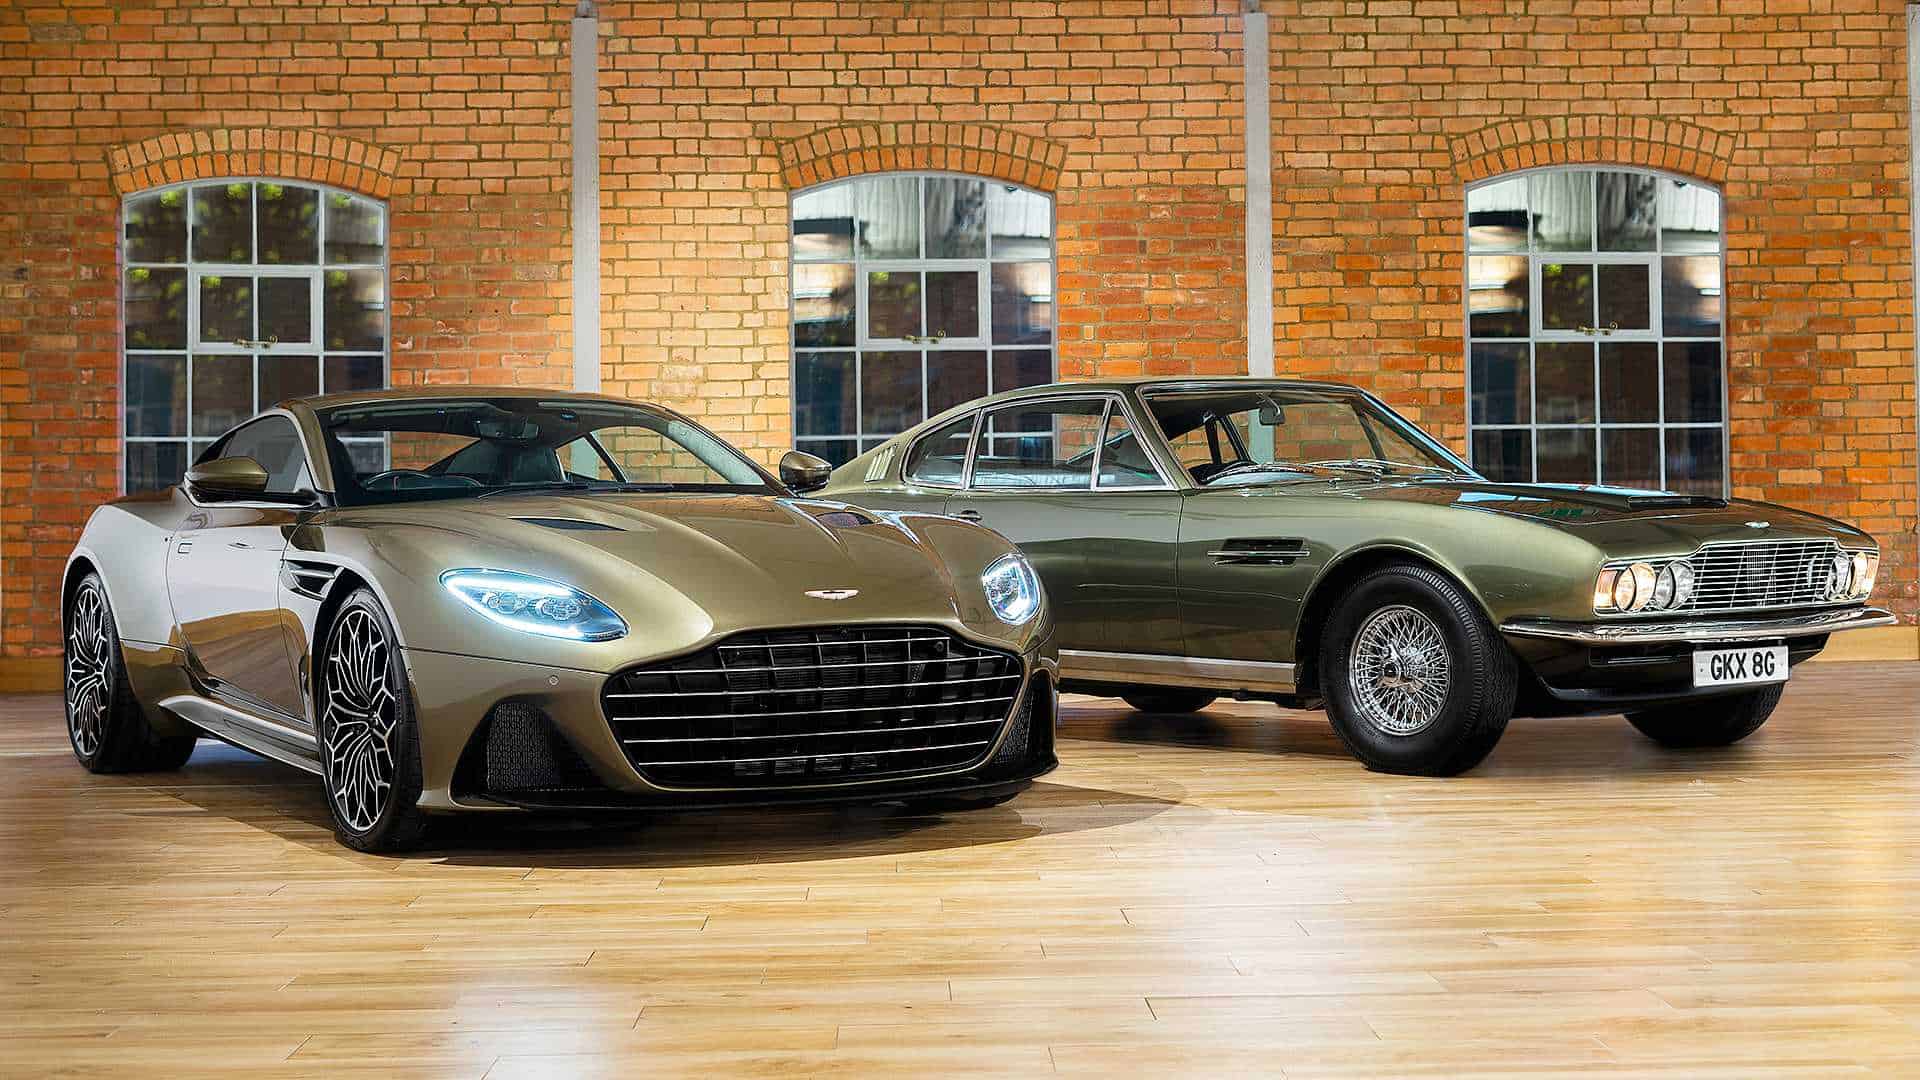 A special edition Aston Martin DBS Superleggera On Her Majesty’s Secret Service